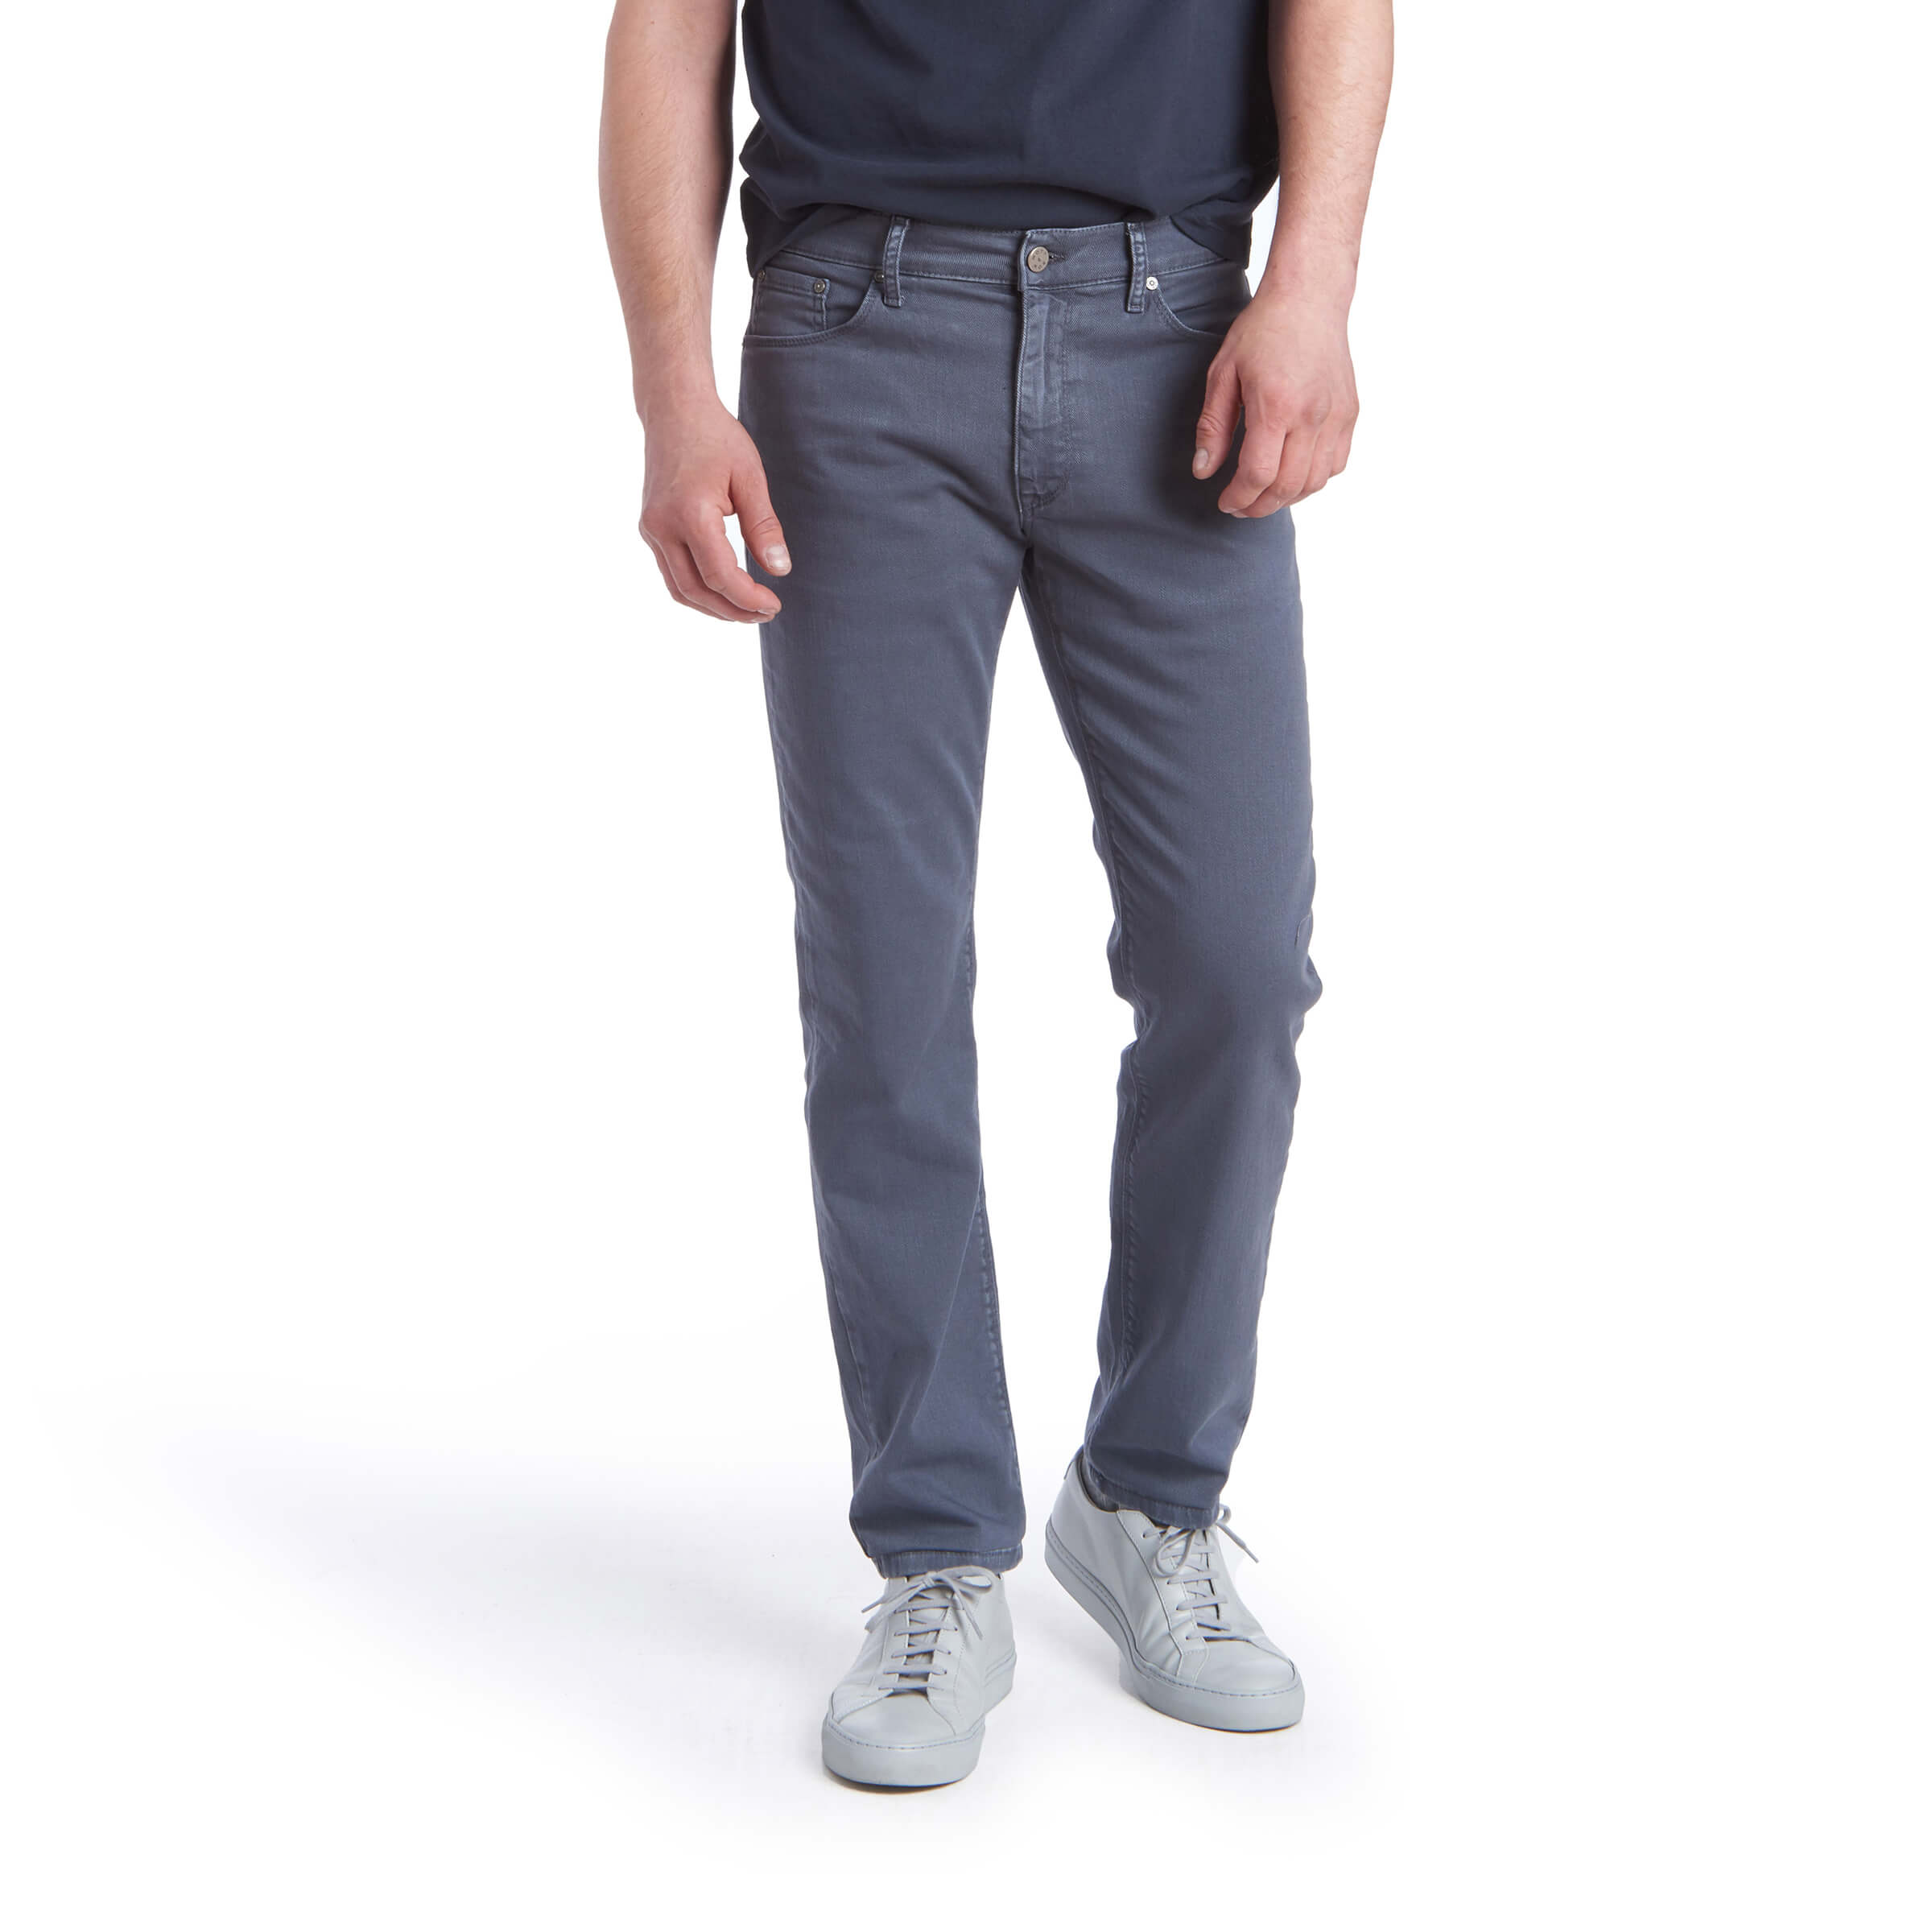 Men wearing Pizarra Slim Mercer Jeans